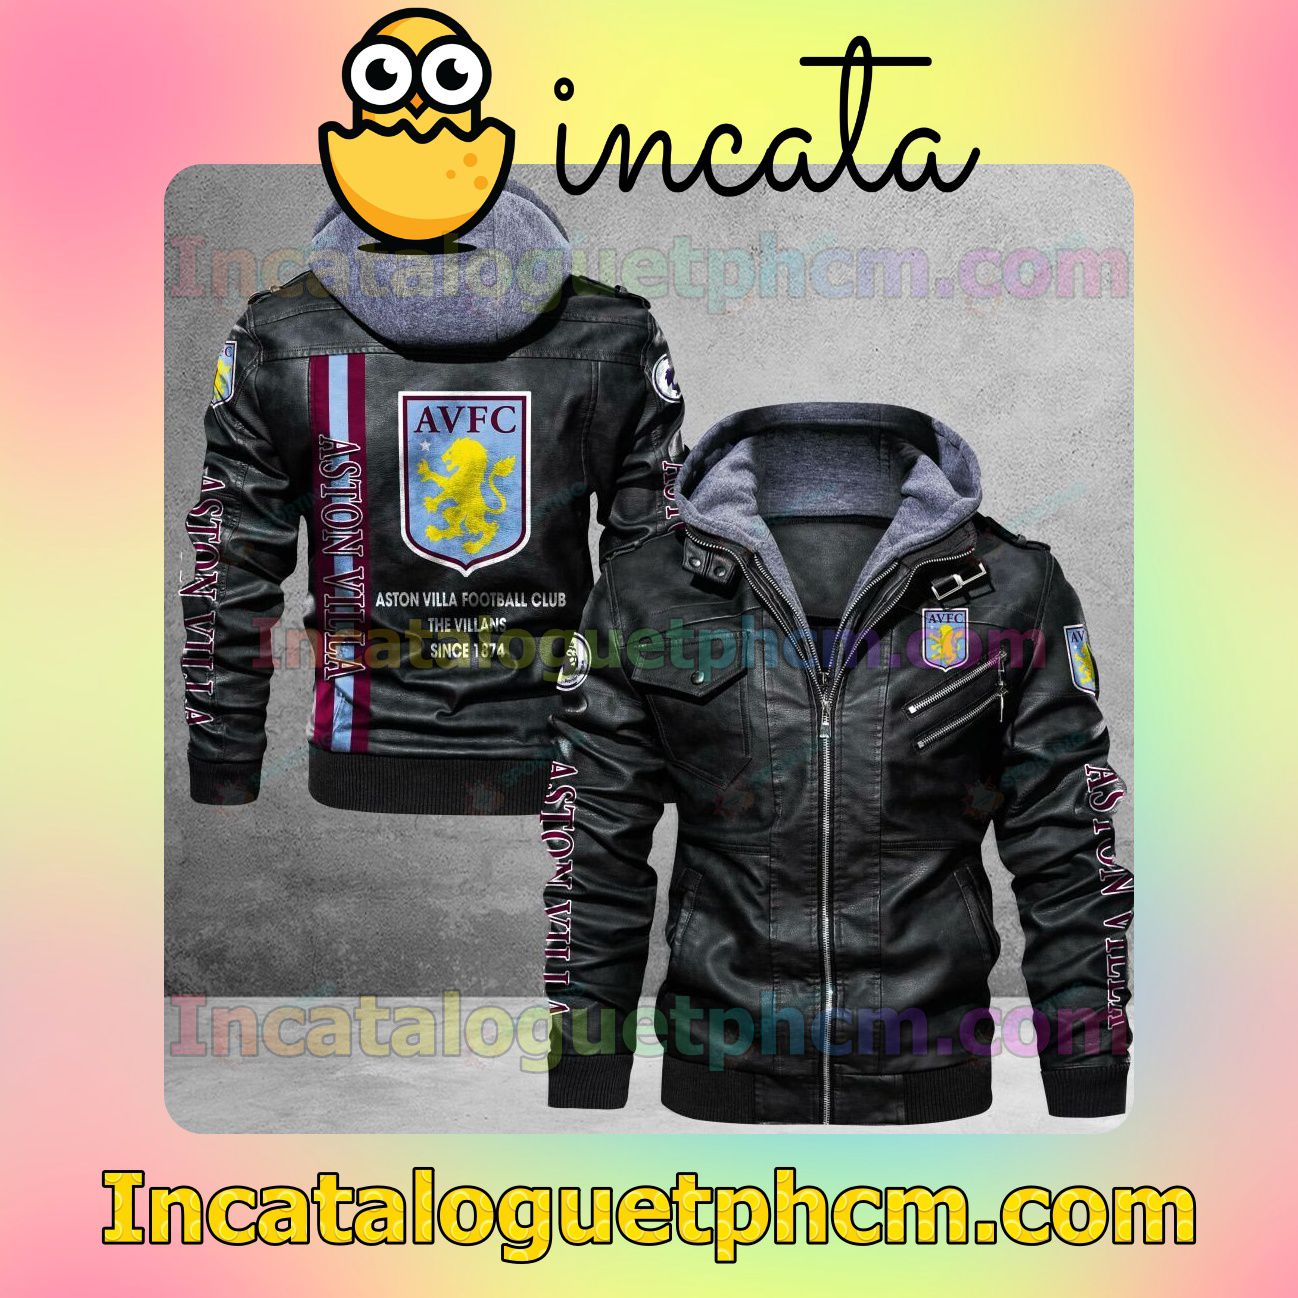 Aston Villa F.C Brand Uniform Leather Jacket